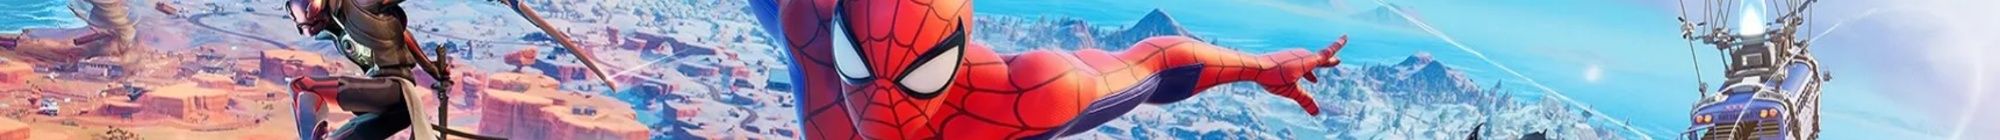 spiderman in fortnite banner